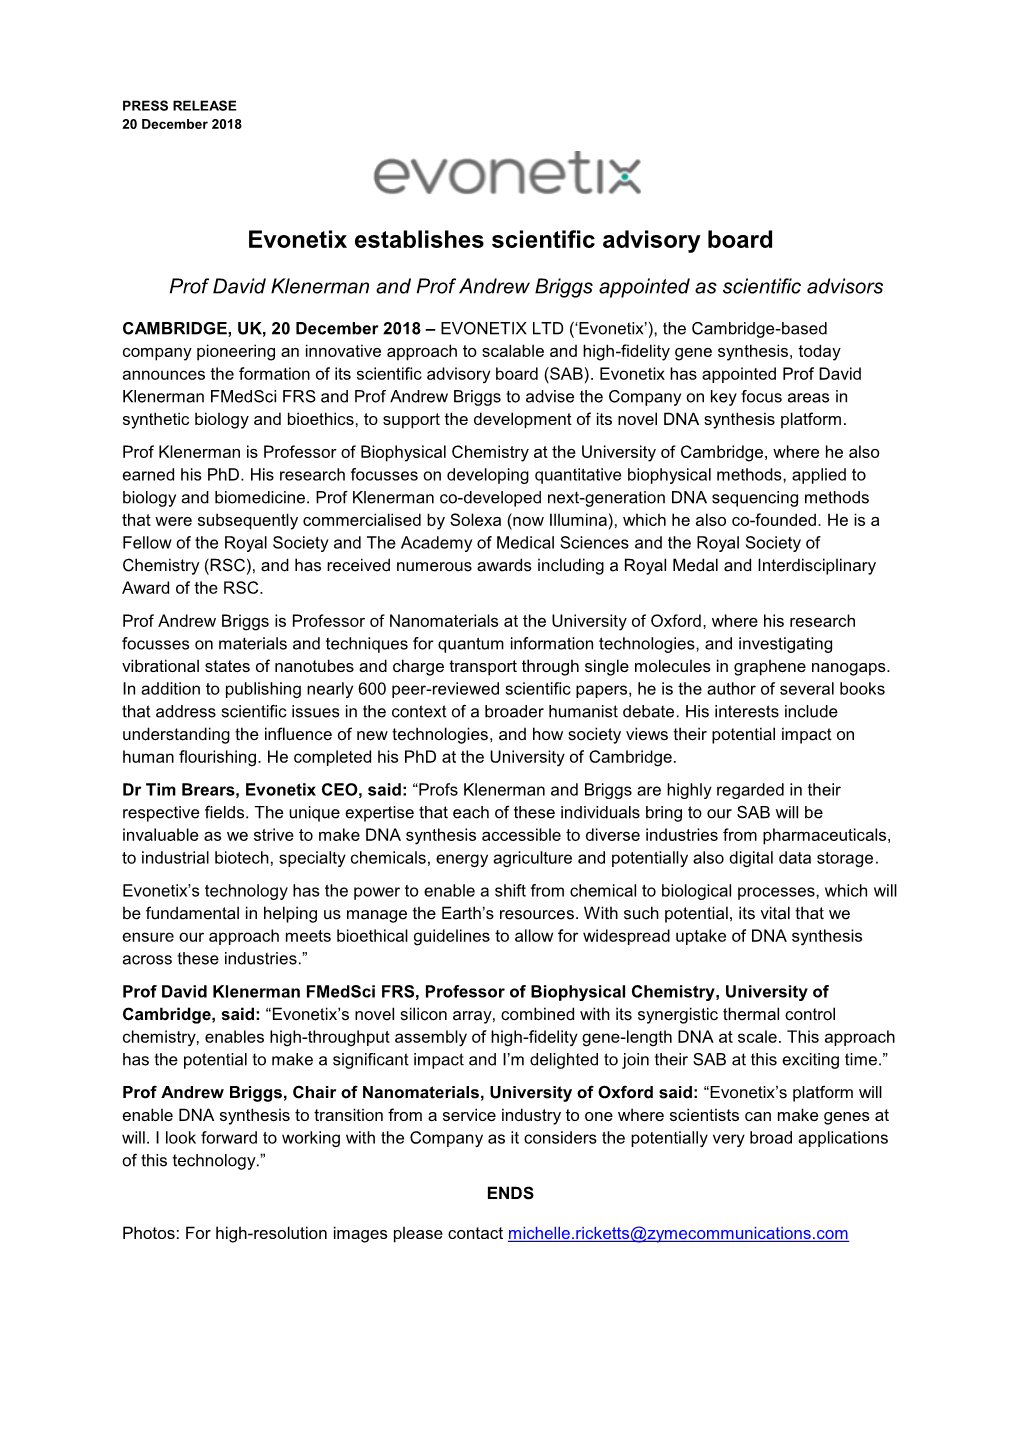 Evonetix Establishes Scientific Advisory Board